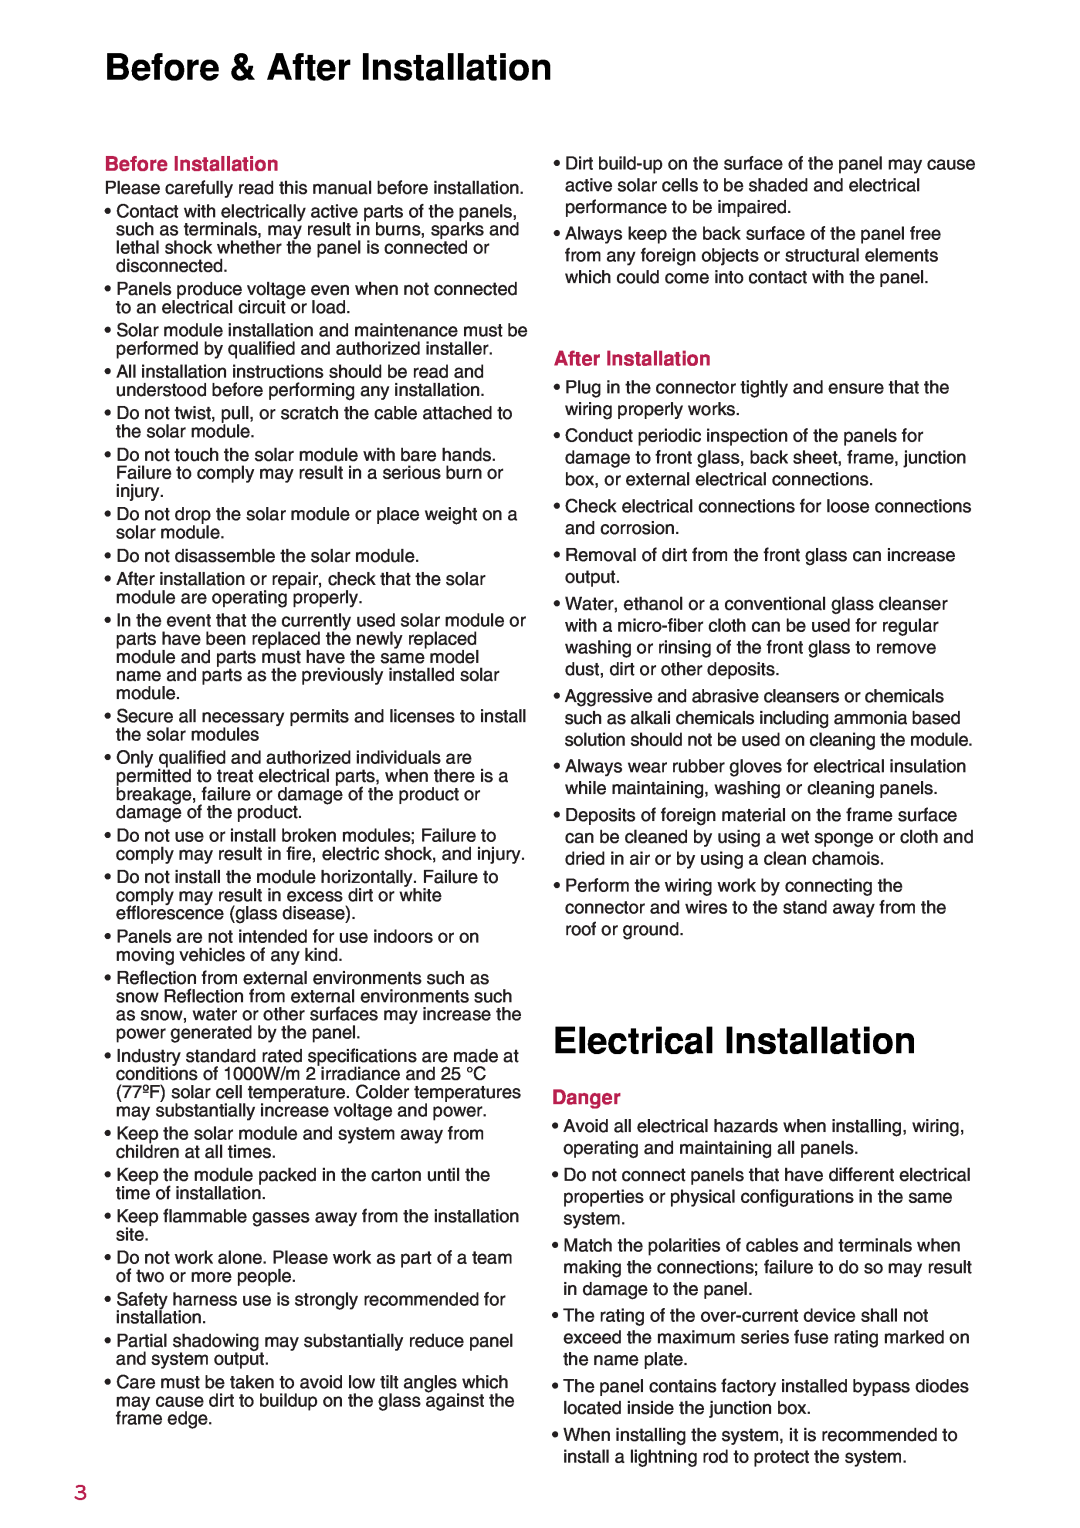 LG Electronics LGXXXN1C(W)-G3 Before & After Installation, Electrical Installation, Before Installation, Danger 